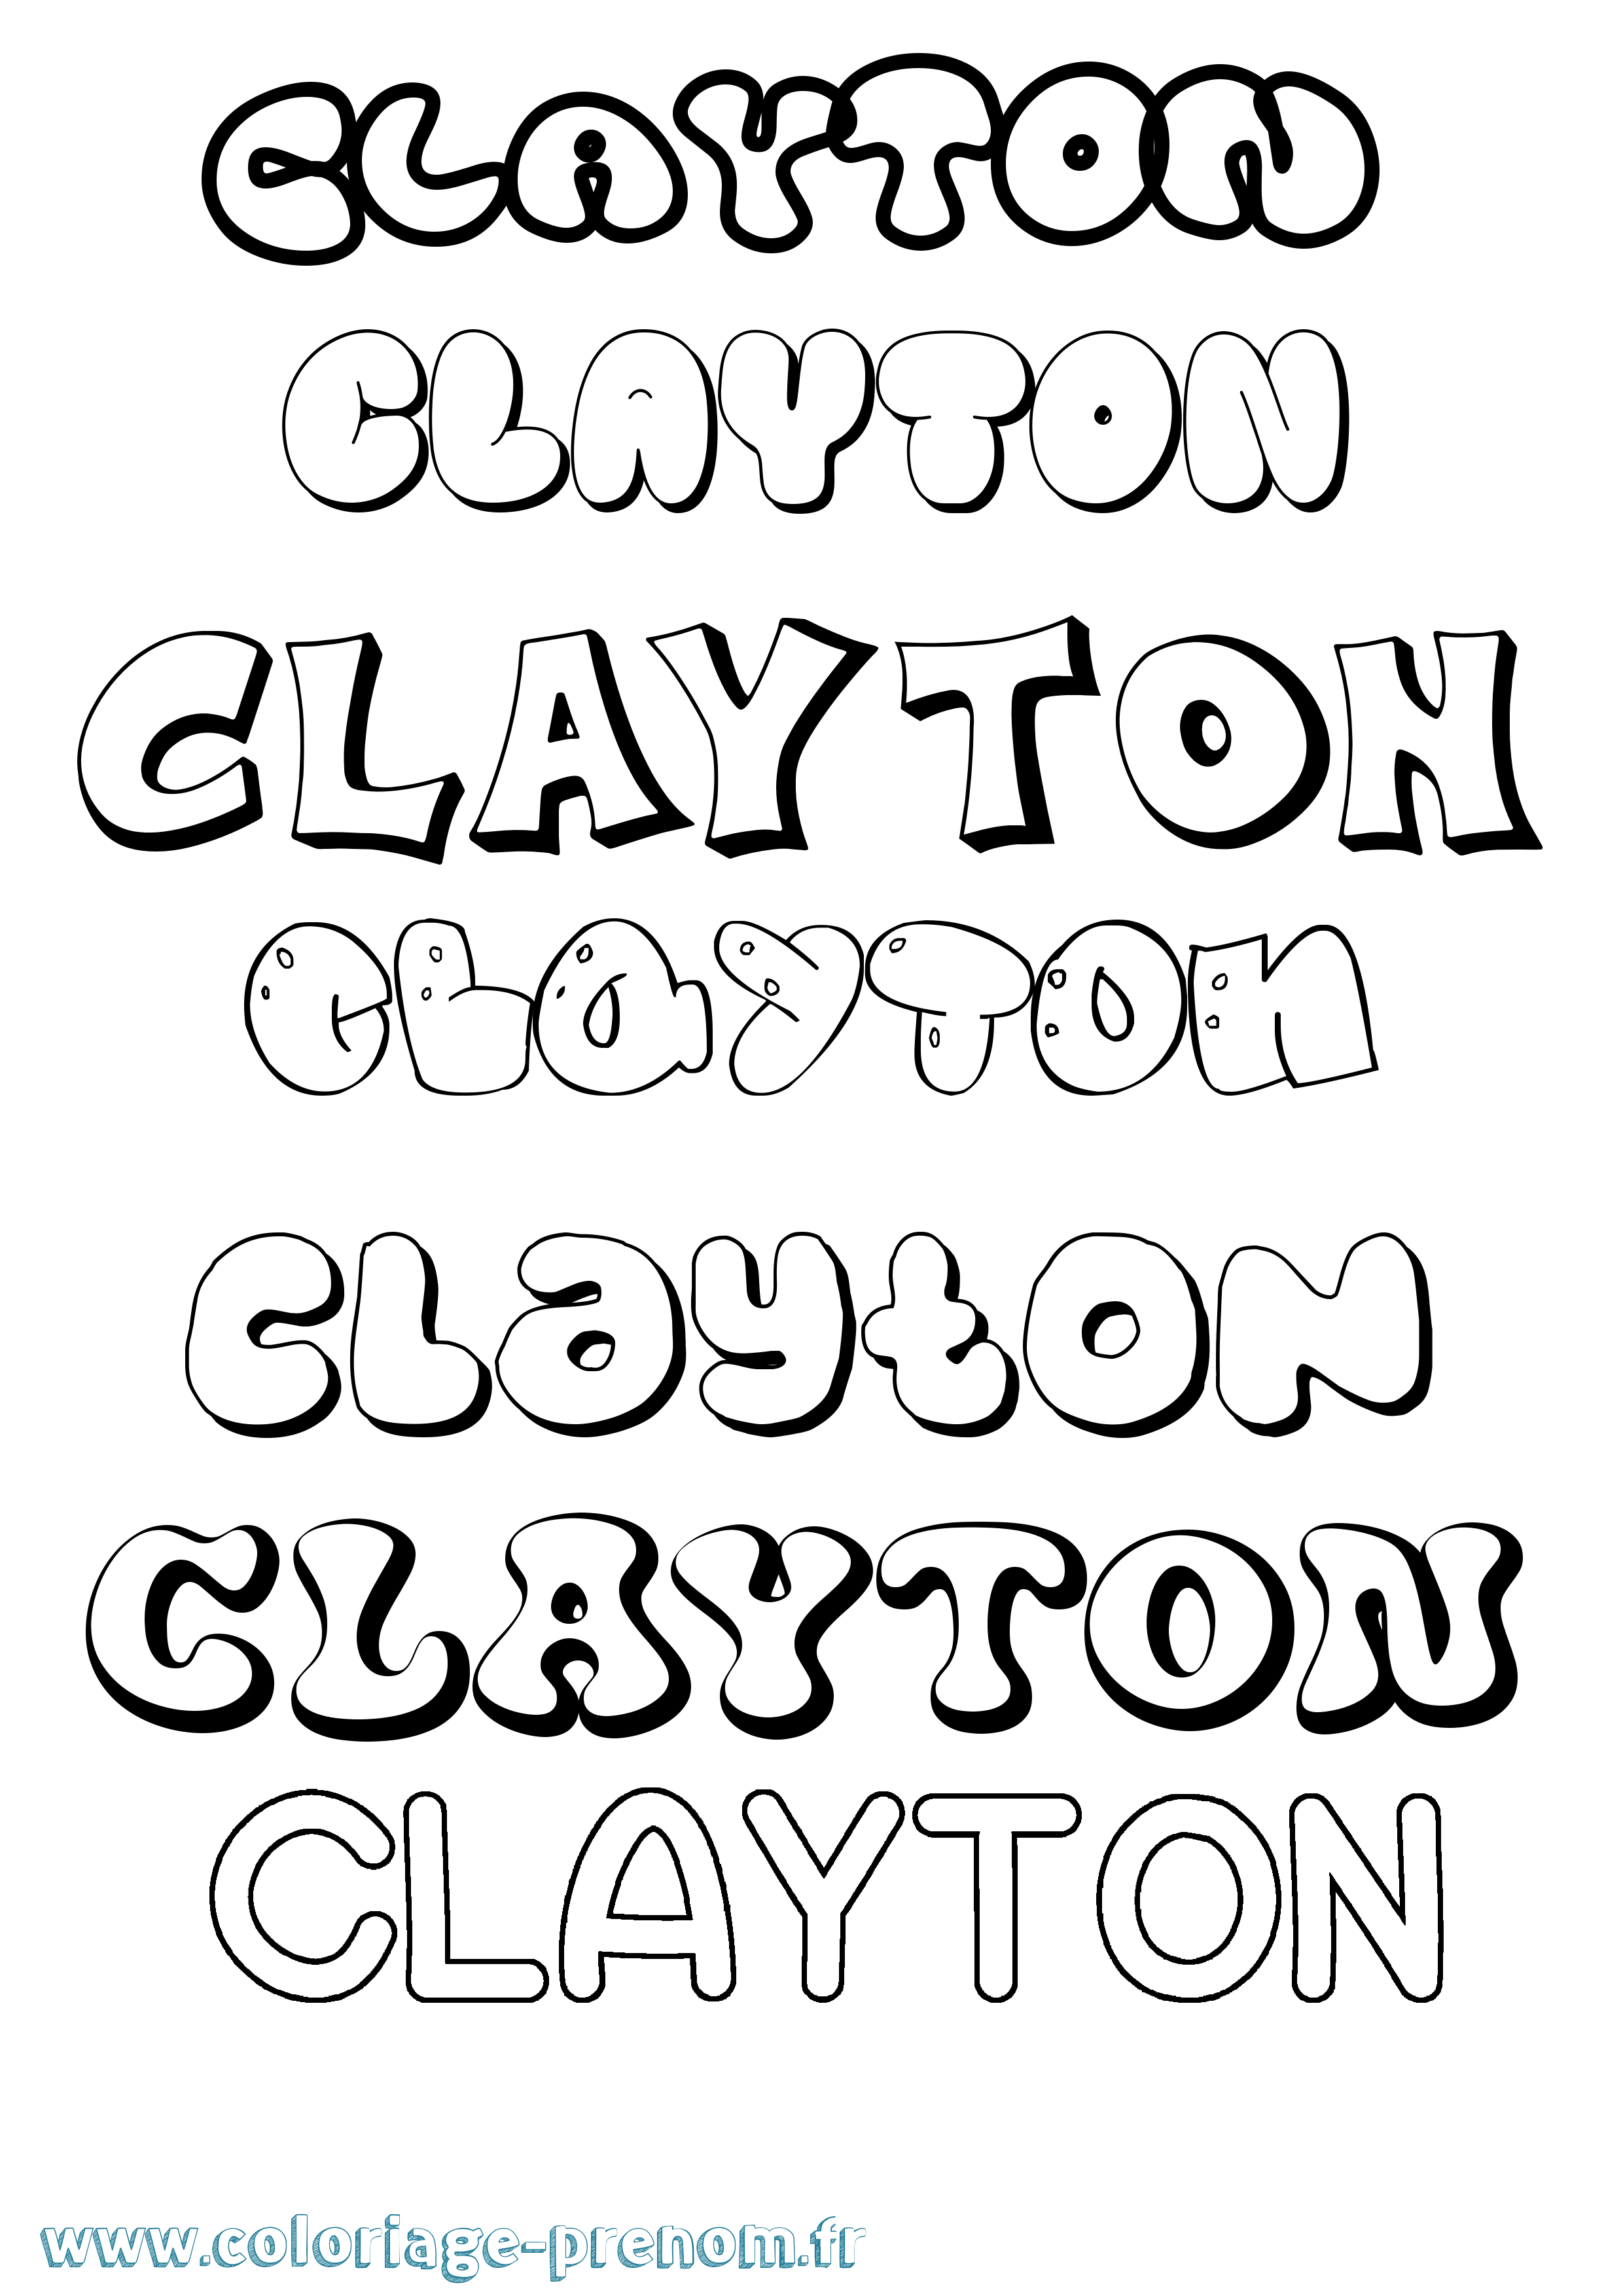 Coloriage prénom Clayton Bubble